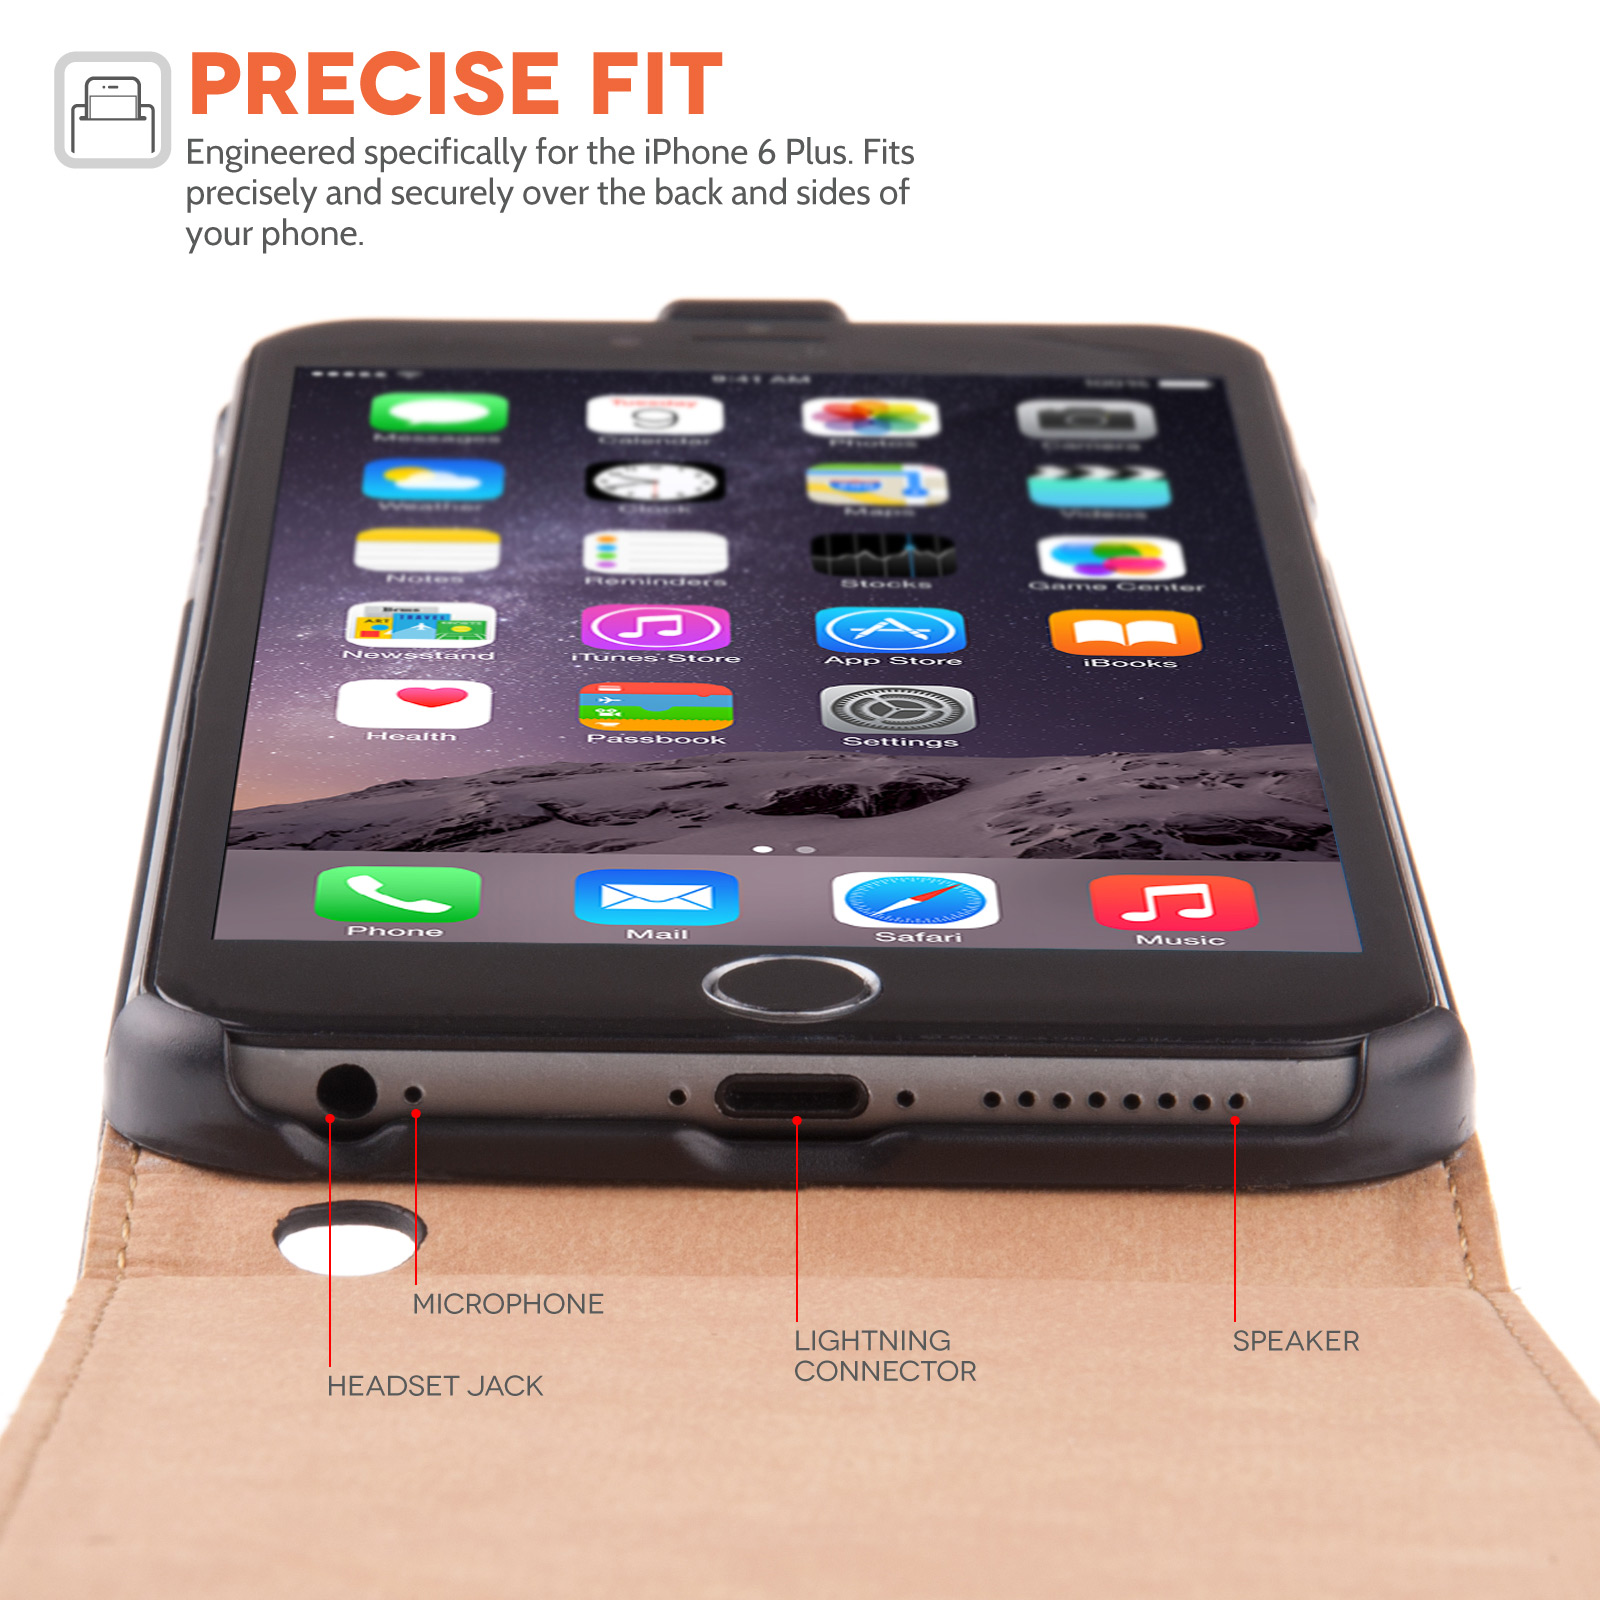 Caseflex iPhone 6 Plus and 6s Plus Real Leather Flip Case - Black